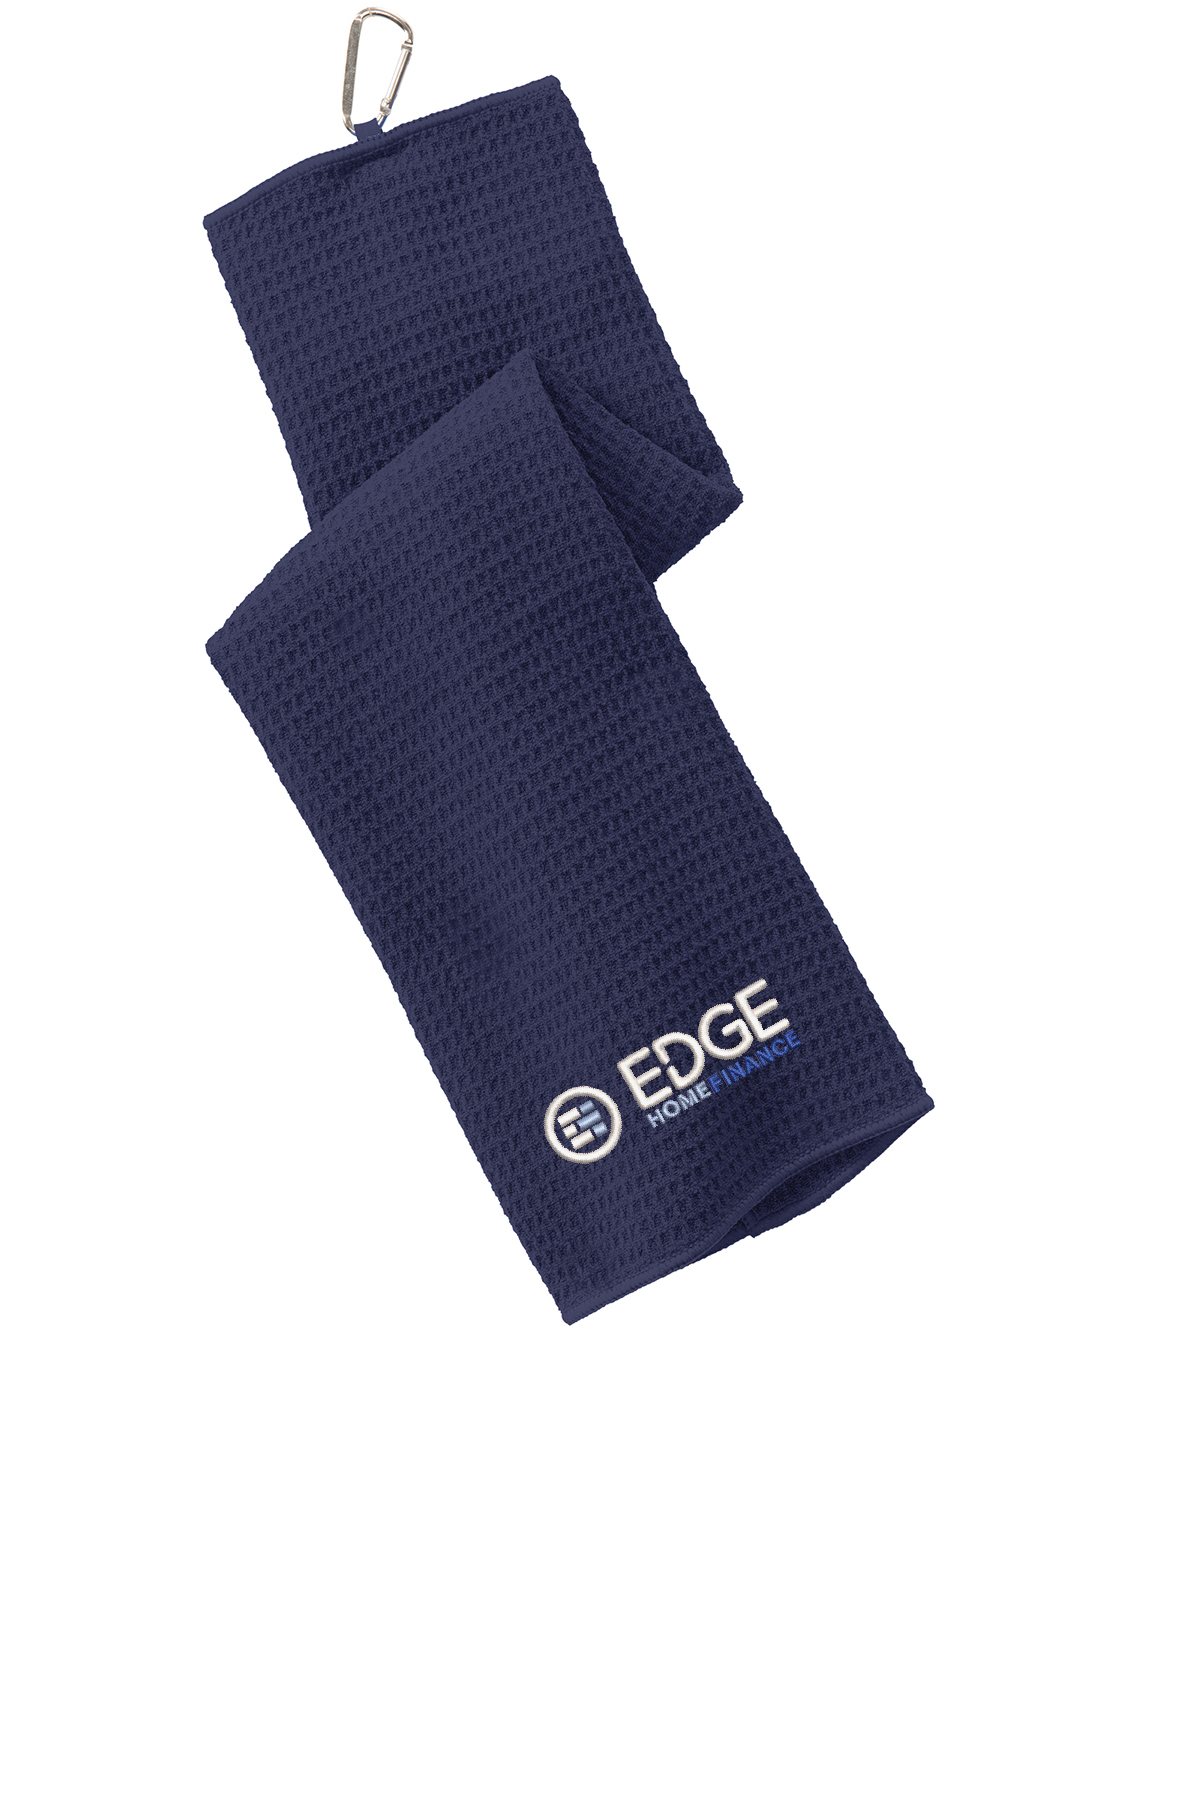 Edge Golf Towel Navy 5 pack